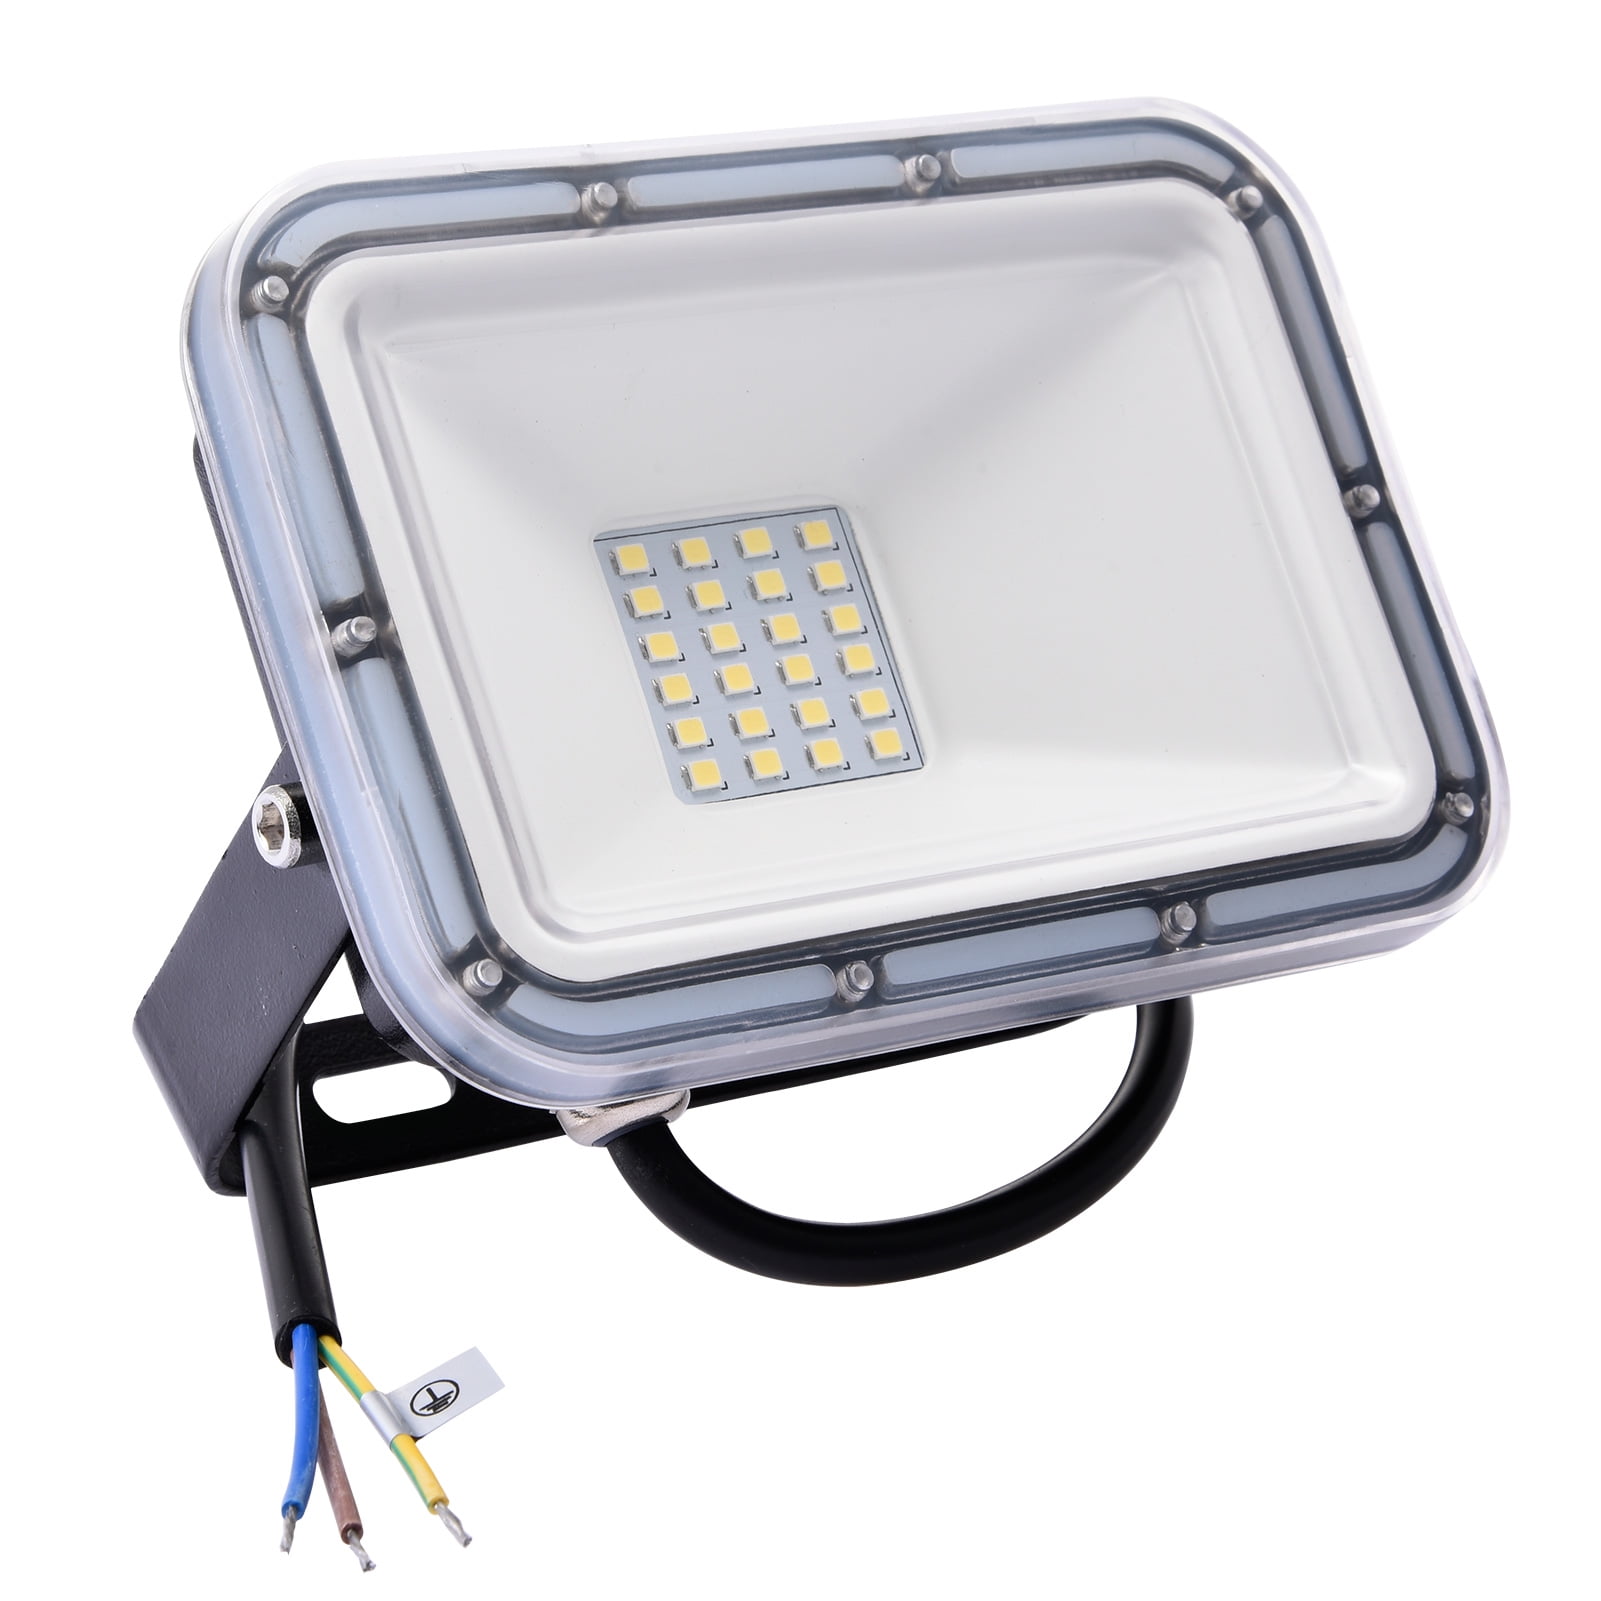 4 X 20W LED Flood Light Outdoor Security Lighting Cool White Slim Lamp US Stock 